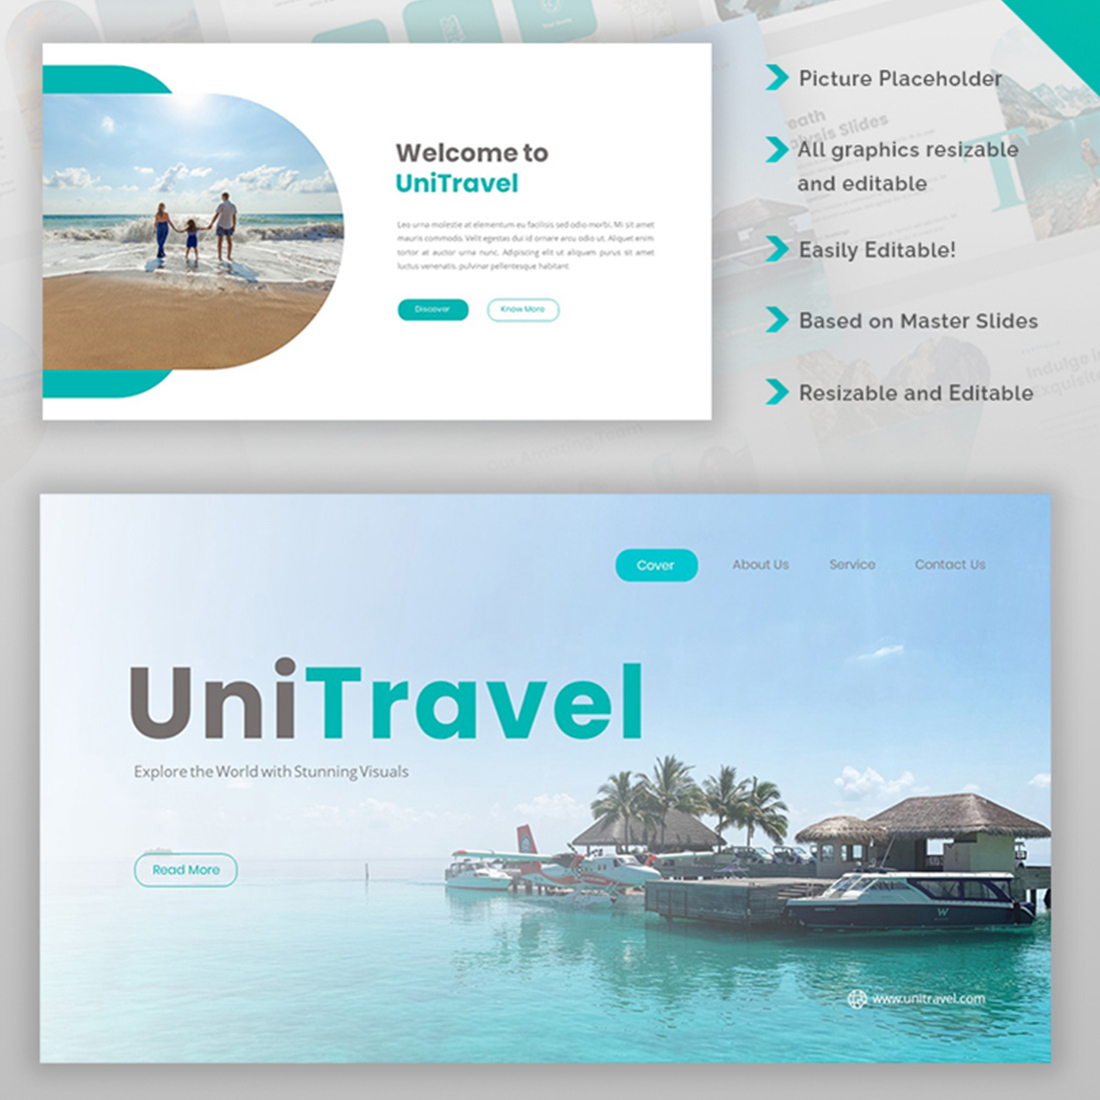 UniTravel-Travel Agency Google Slides Template preview image.